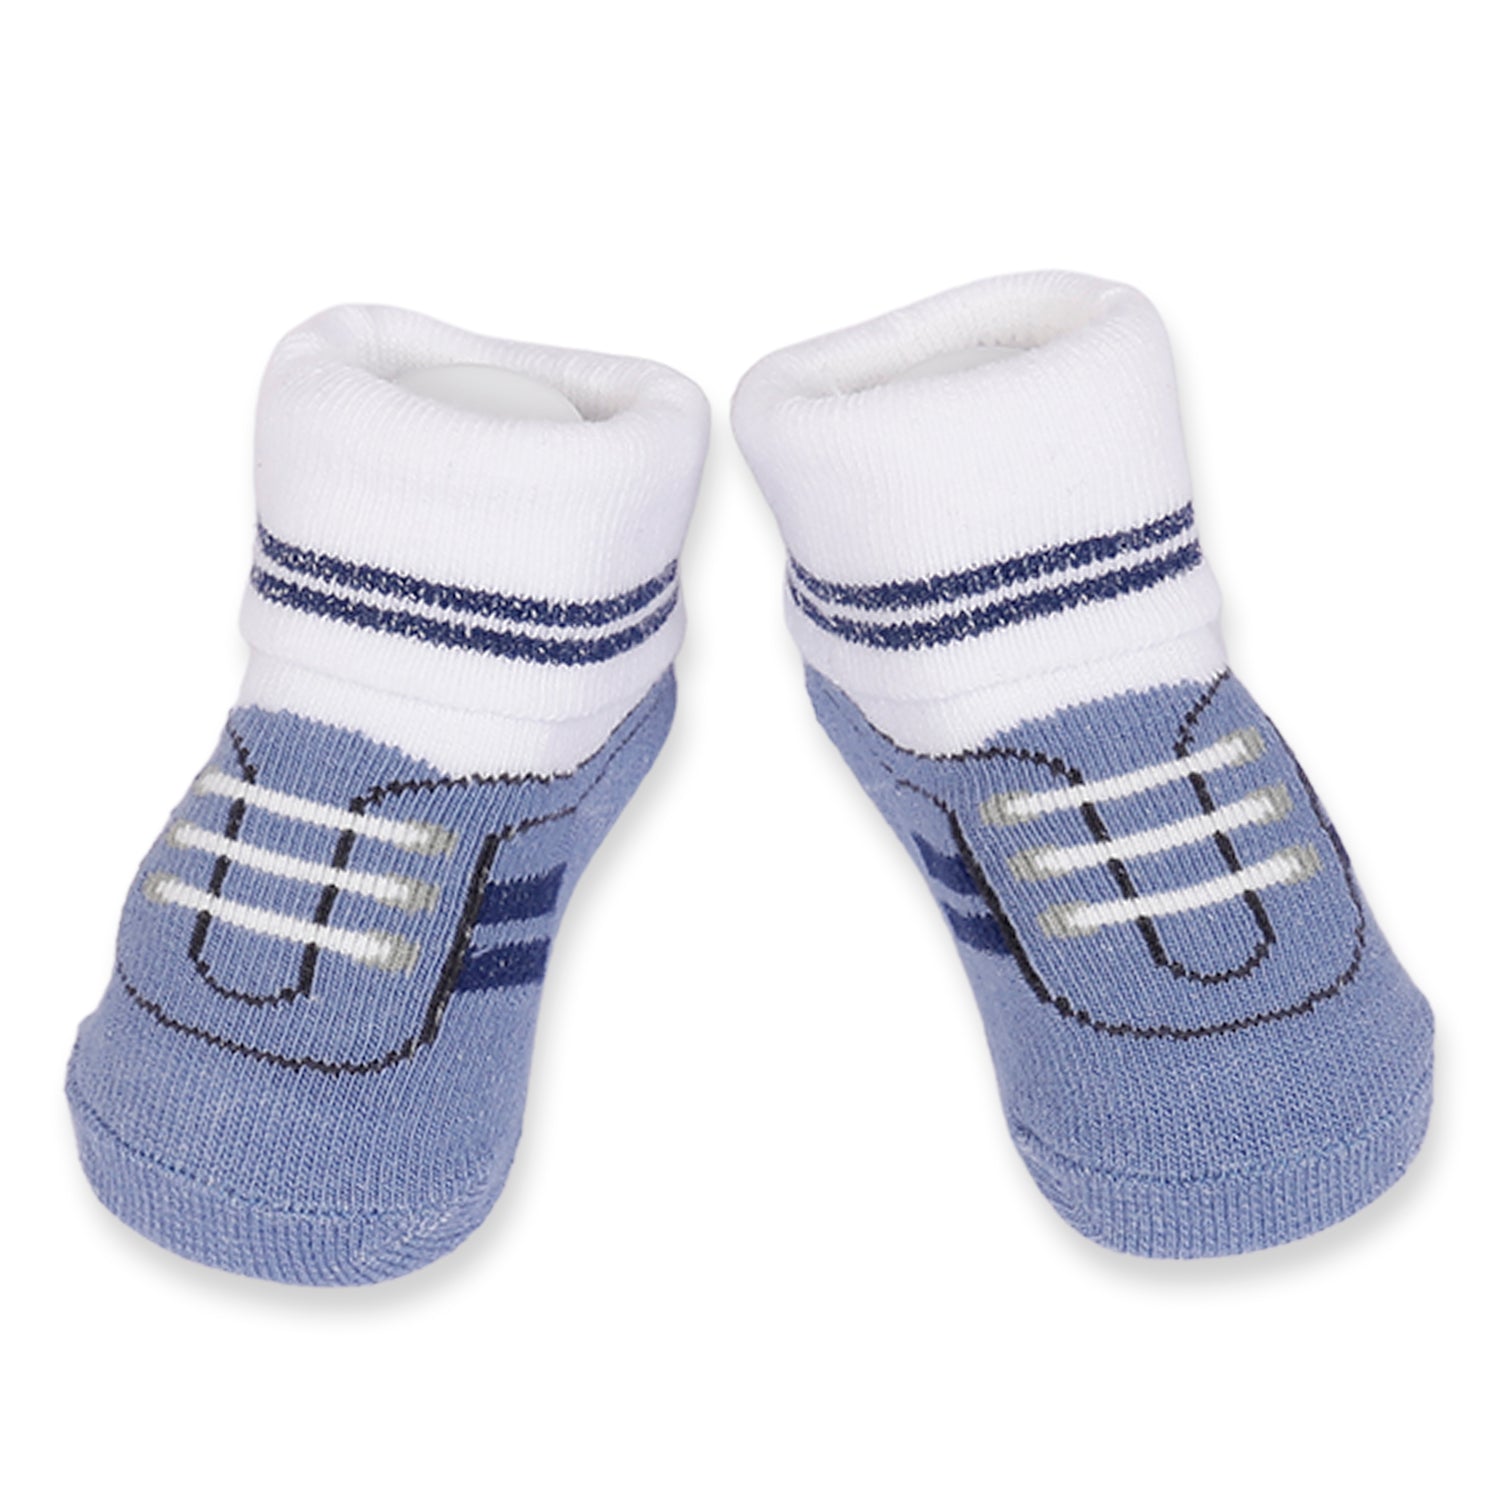 Baby Moo Socks Pack Of 3 Pairs For Newborn Boy Sneaker Print Blue